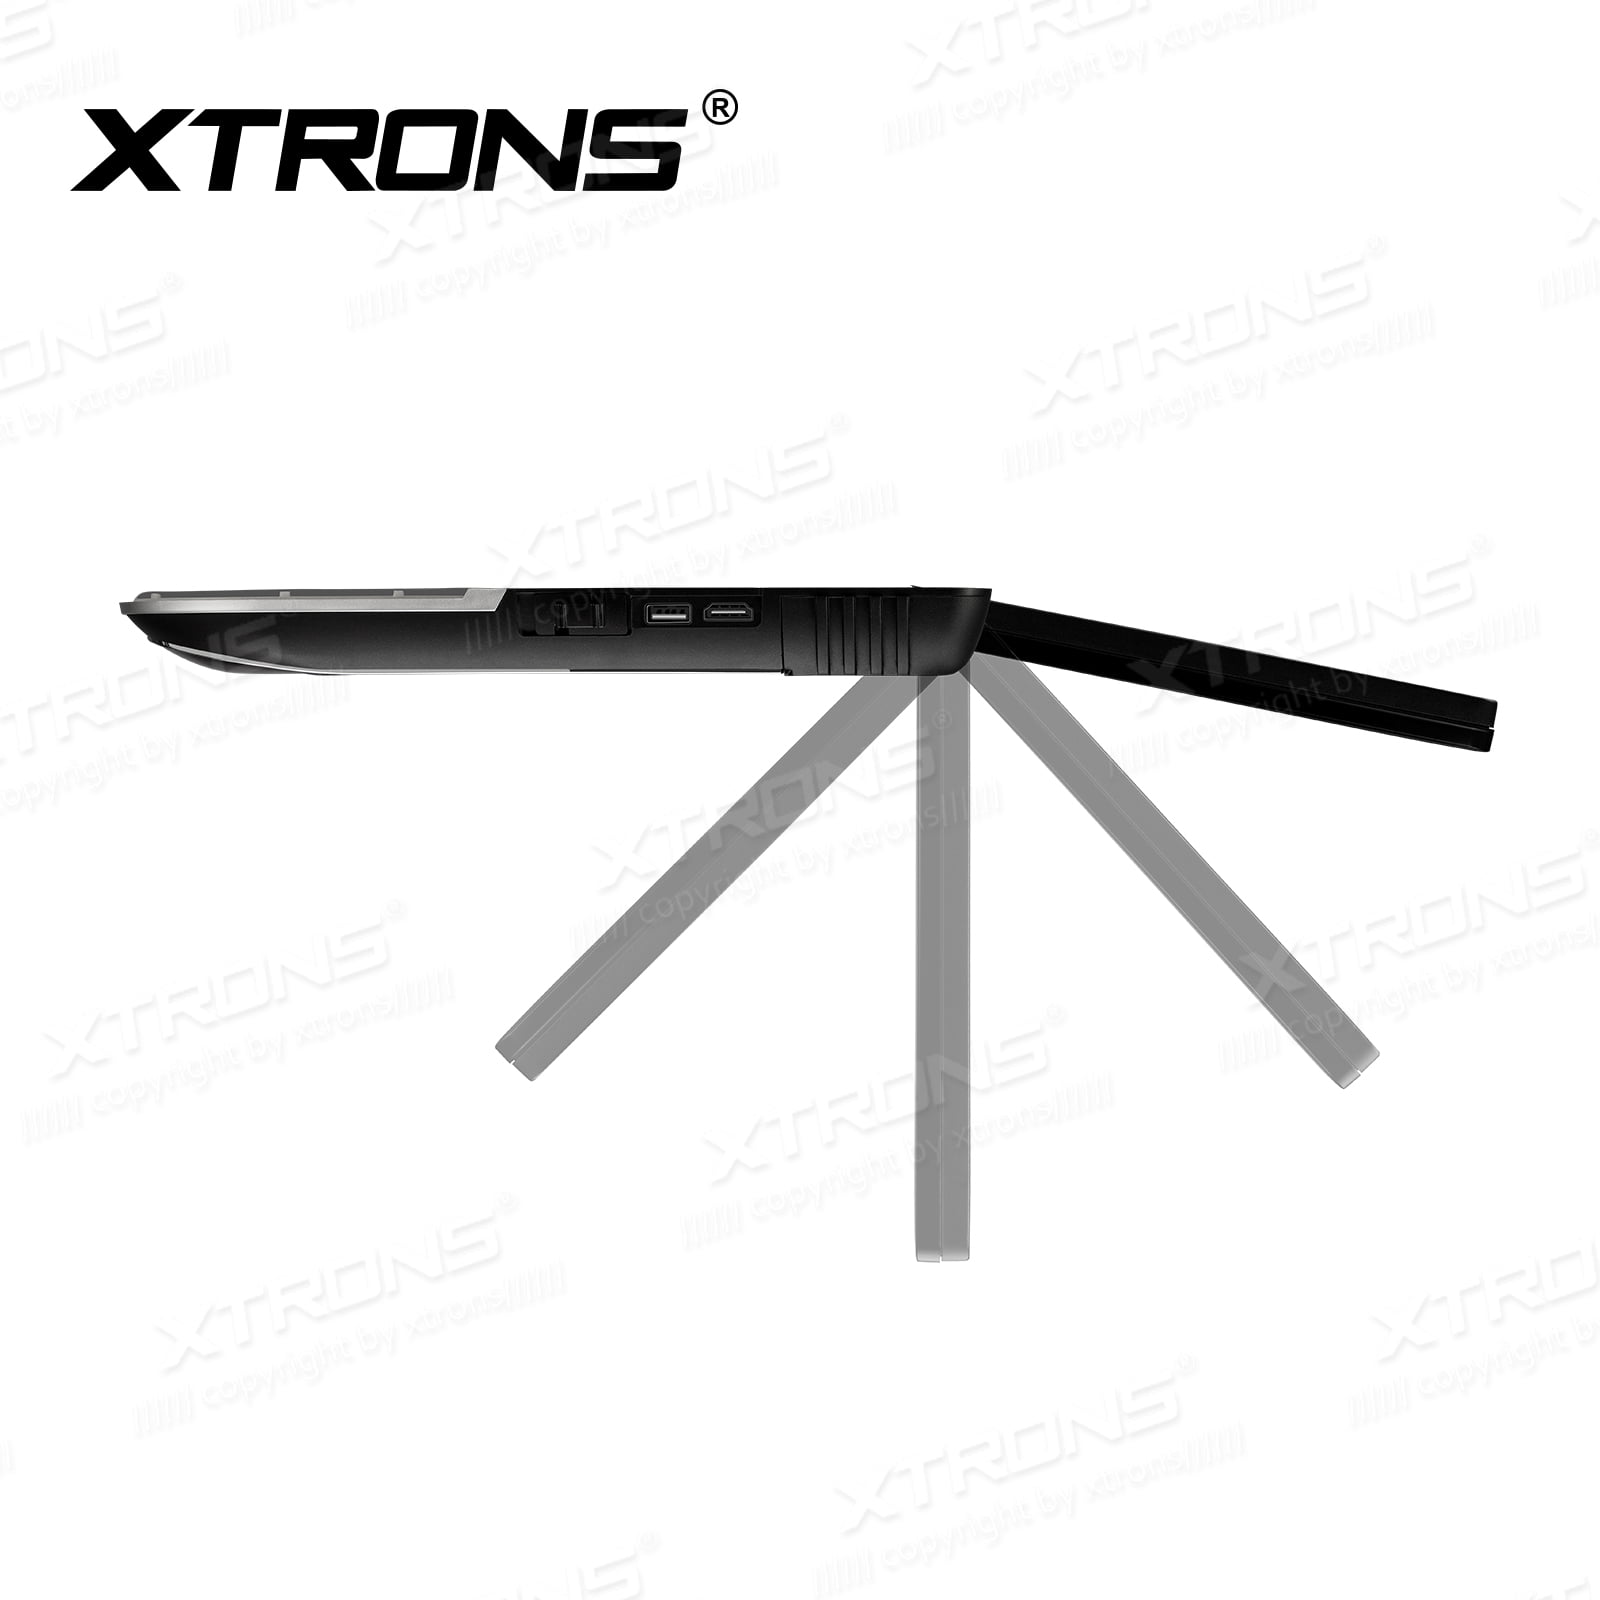 XTRONS Pantalla de monitor montada en el techo del automóvil de 11.6  pulgadas, pantalla ultradelgada abatible para autos, reproductor de video  de